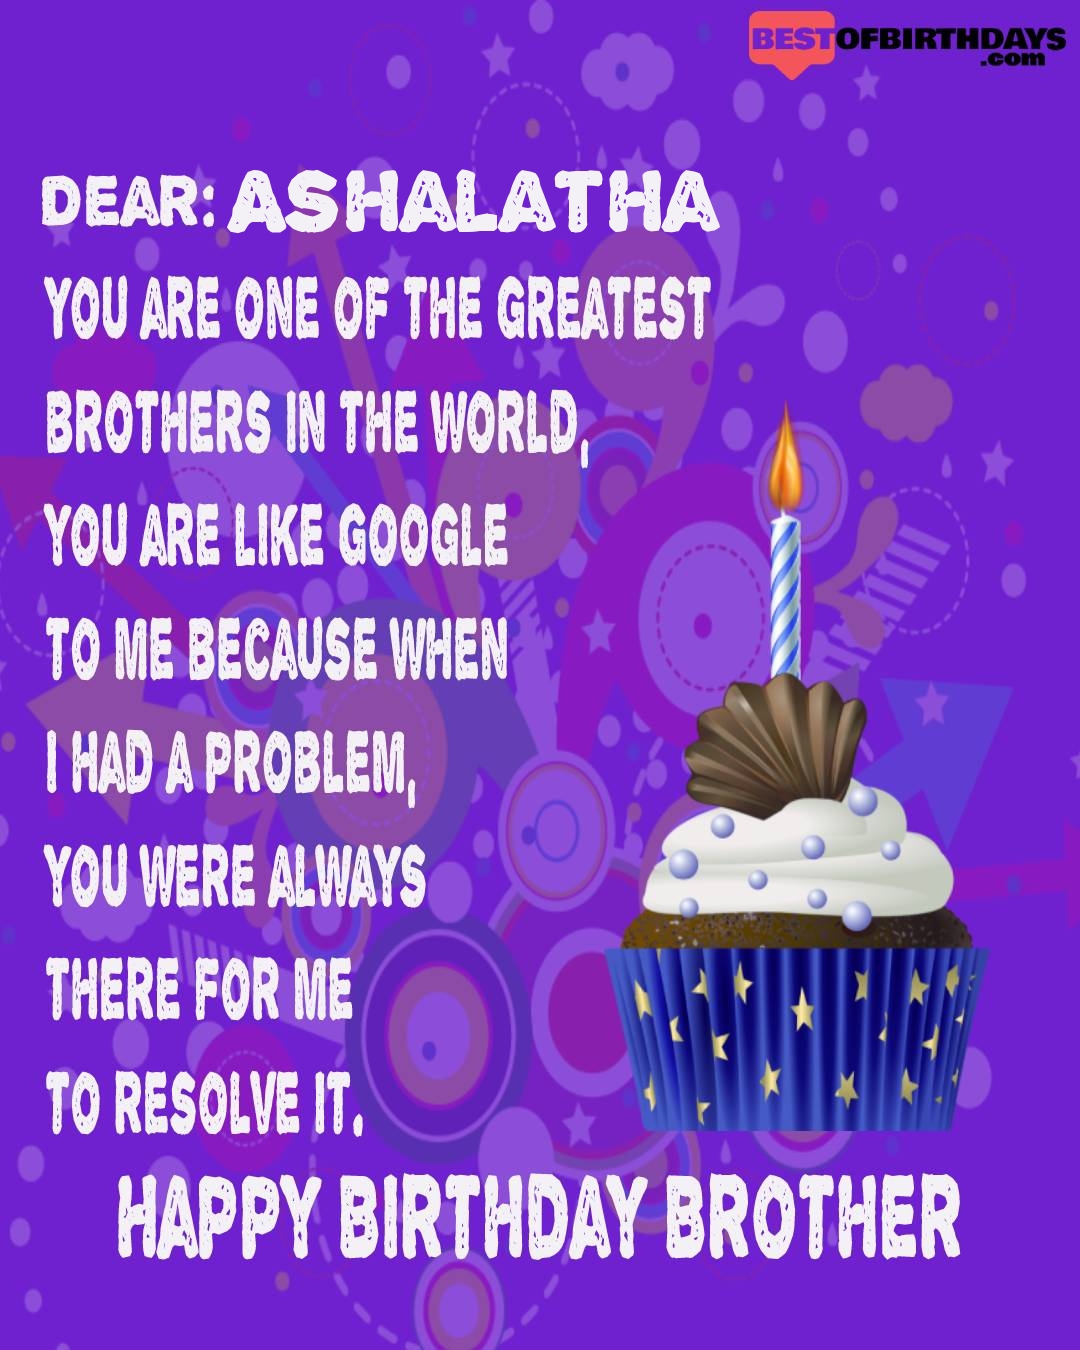 Happy birthday ashalatha bhai brother bro